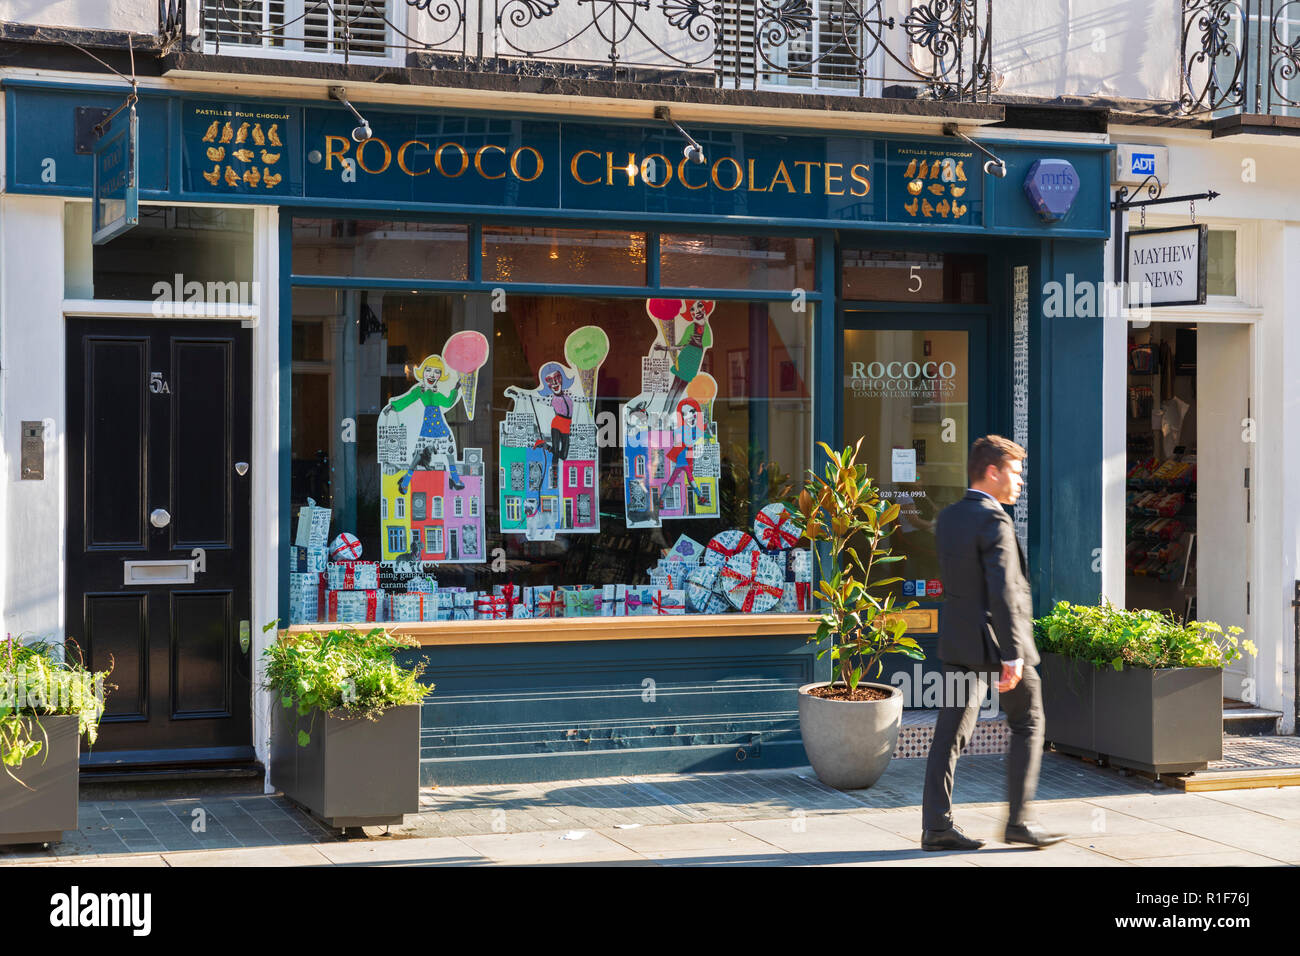 Le rococo Chocolates est un artisan chocolatier dans Motcomb Street, Knightsbridge, Knightsbridge, Londres, Angleterre, Royaume-Uni Banque D'Images